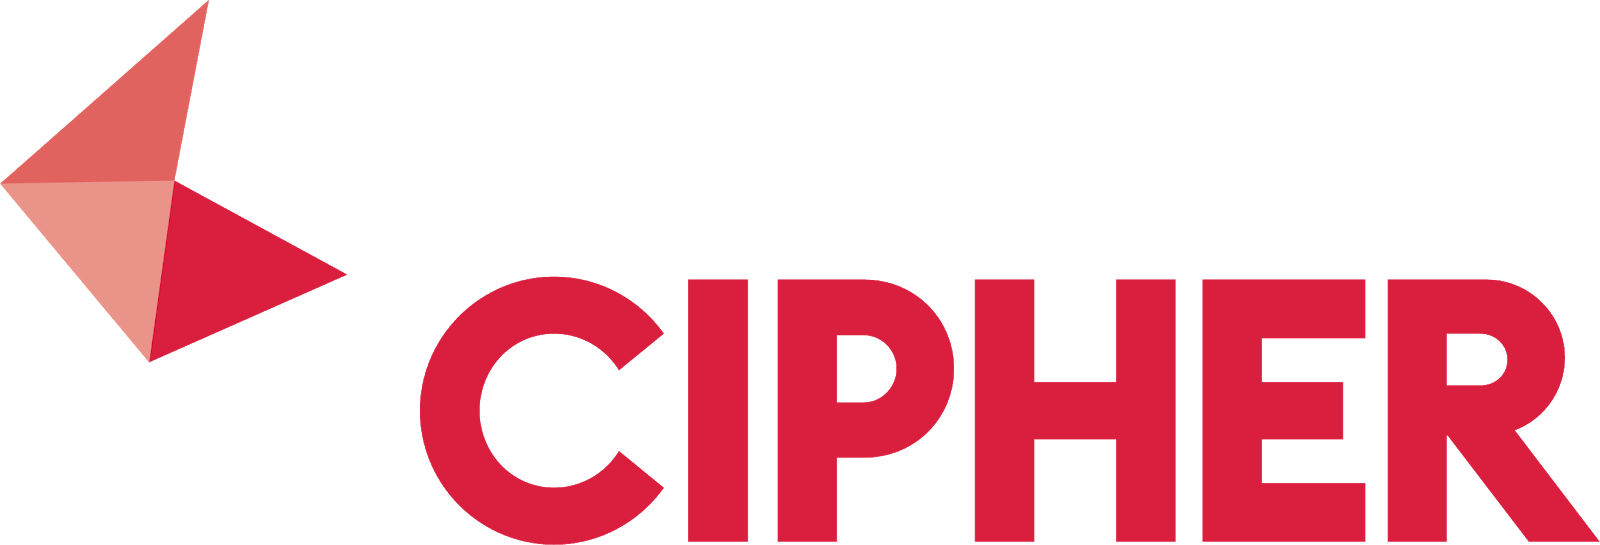 Cipher - Rockee client logo